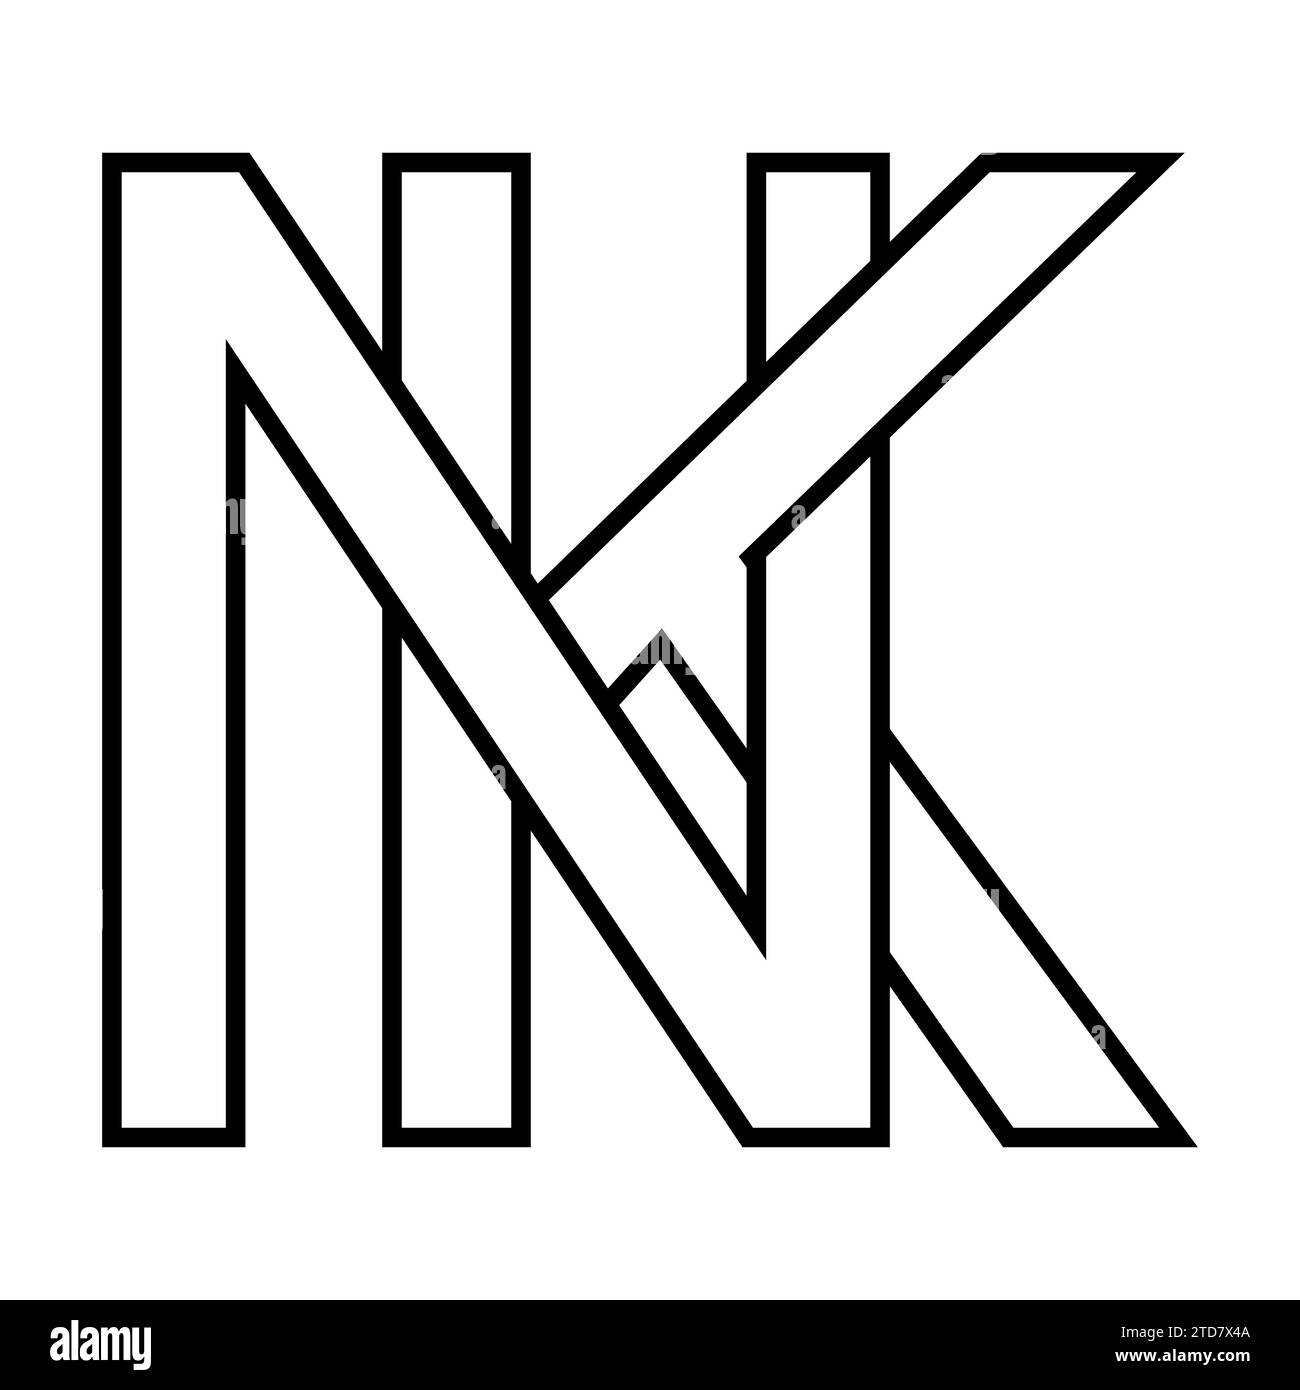 https://c8.alamy.com/compfr/2td7x4a/logo-signe-nk-kn-icone-lettres-doubles-logotype-n-k-2td7x4a.jpg